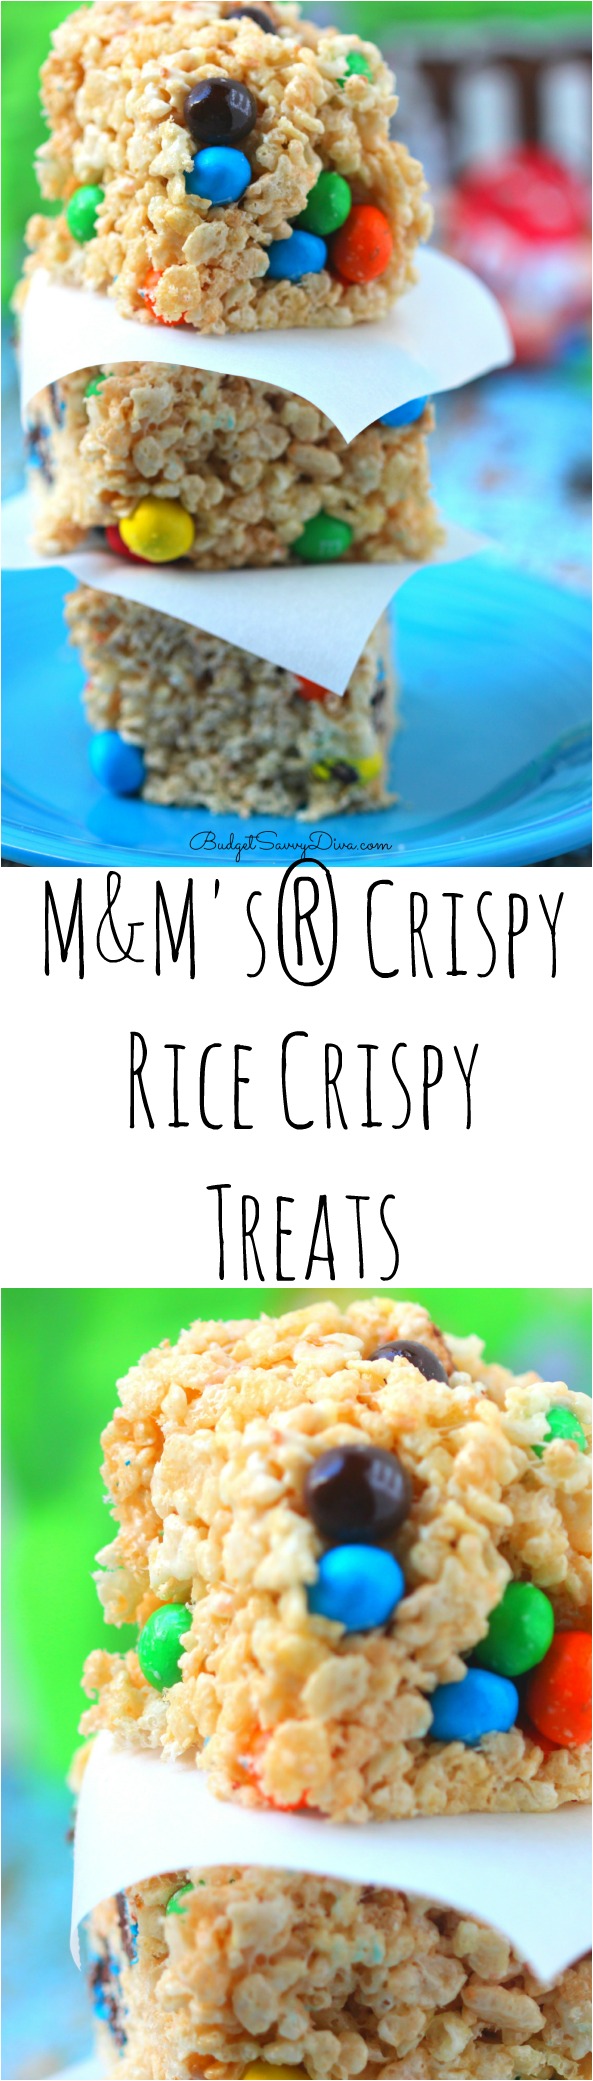 M&M's® Crispy Rice Crispy Treats